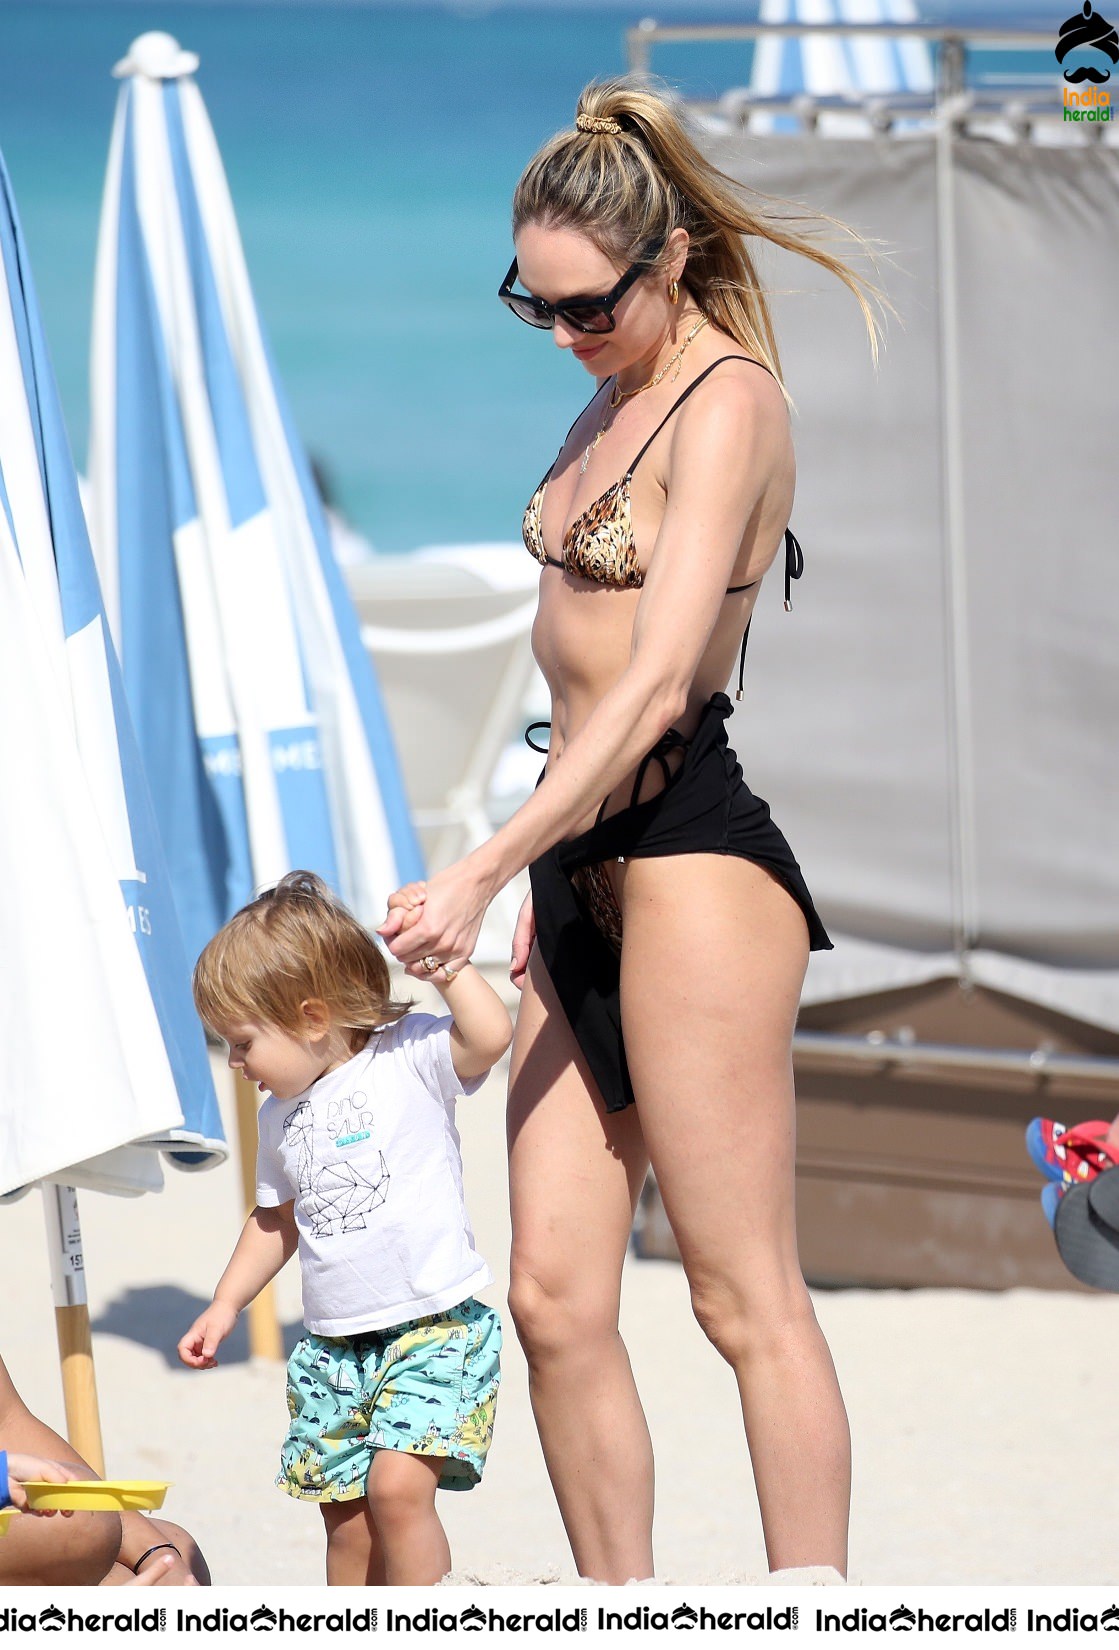 Candice Swanepoel and Lais Ribeiro seen in Bikini on the beach in Miami Set 3